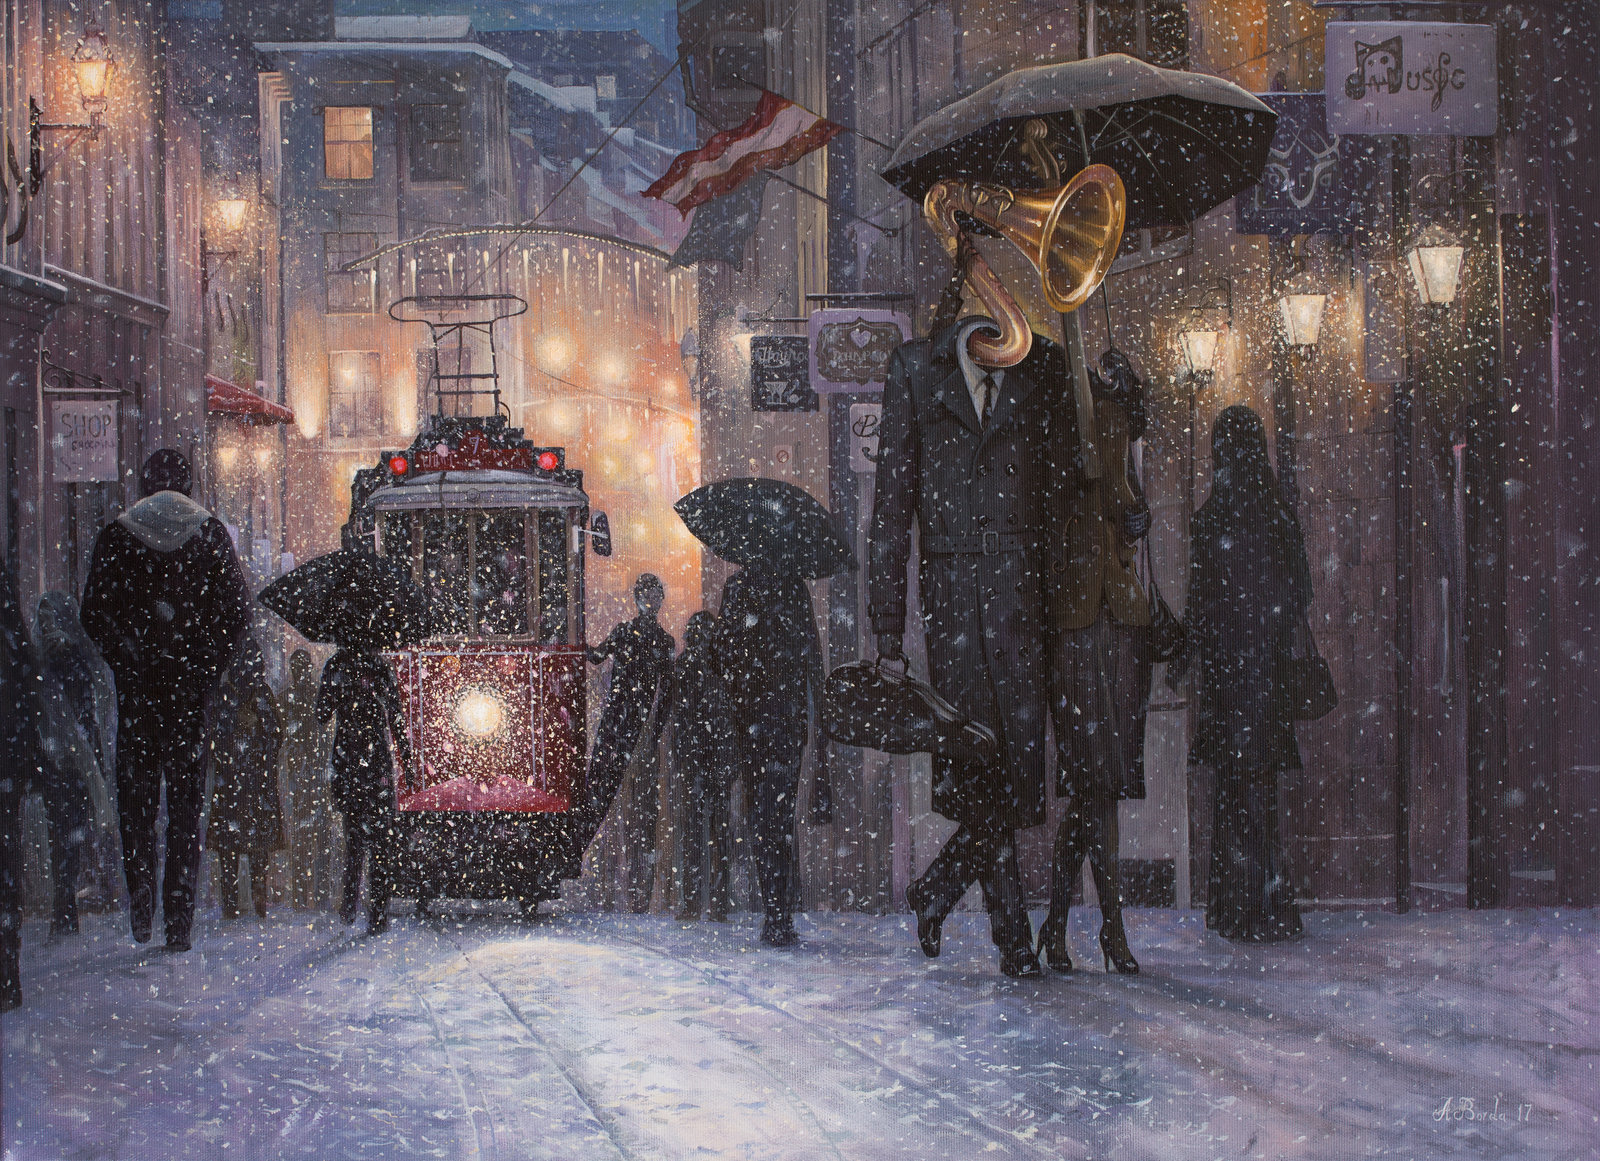 Artwork Painting Adrian Borda Surreal Winter Snow Street Snowing People Musical Instrument Tram Crow 1600x1161